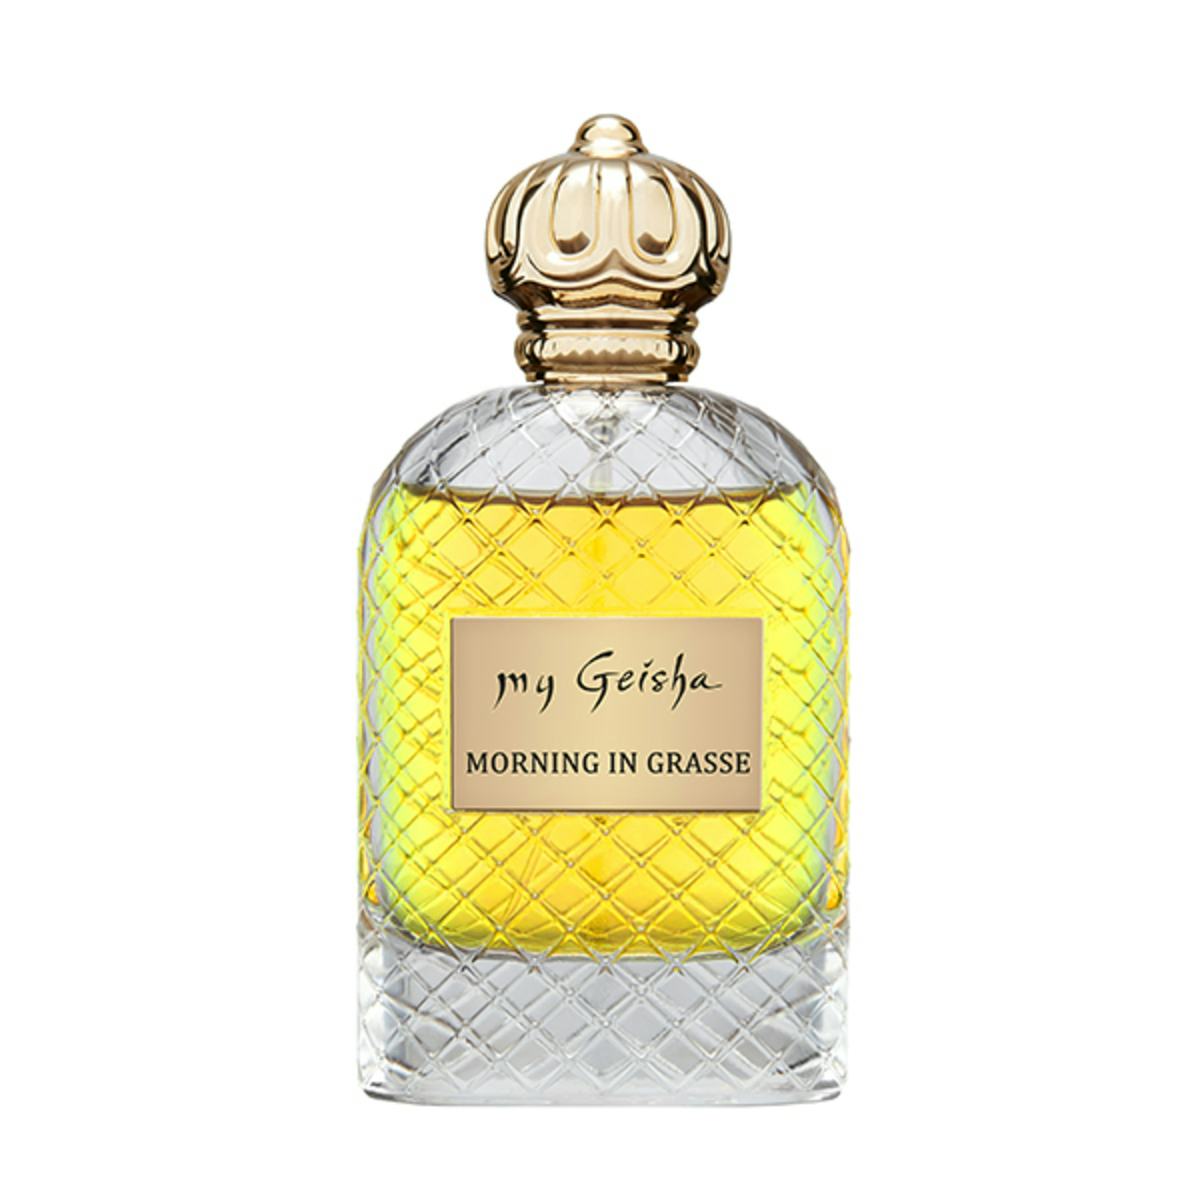 Extrait de parfum "Morning in Grasse" 100 ml, artisanal product for direct sale in Switzerland